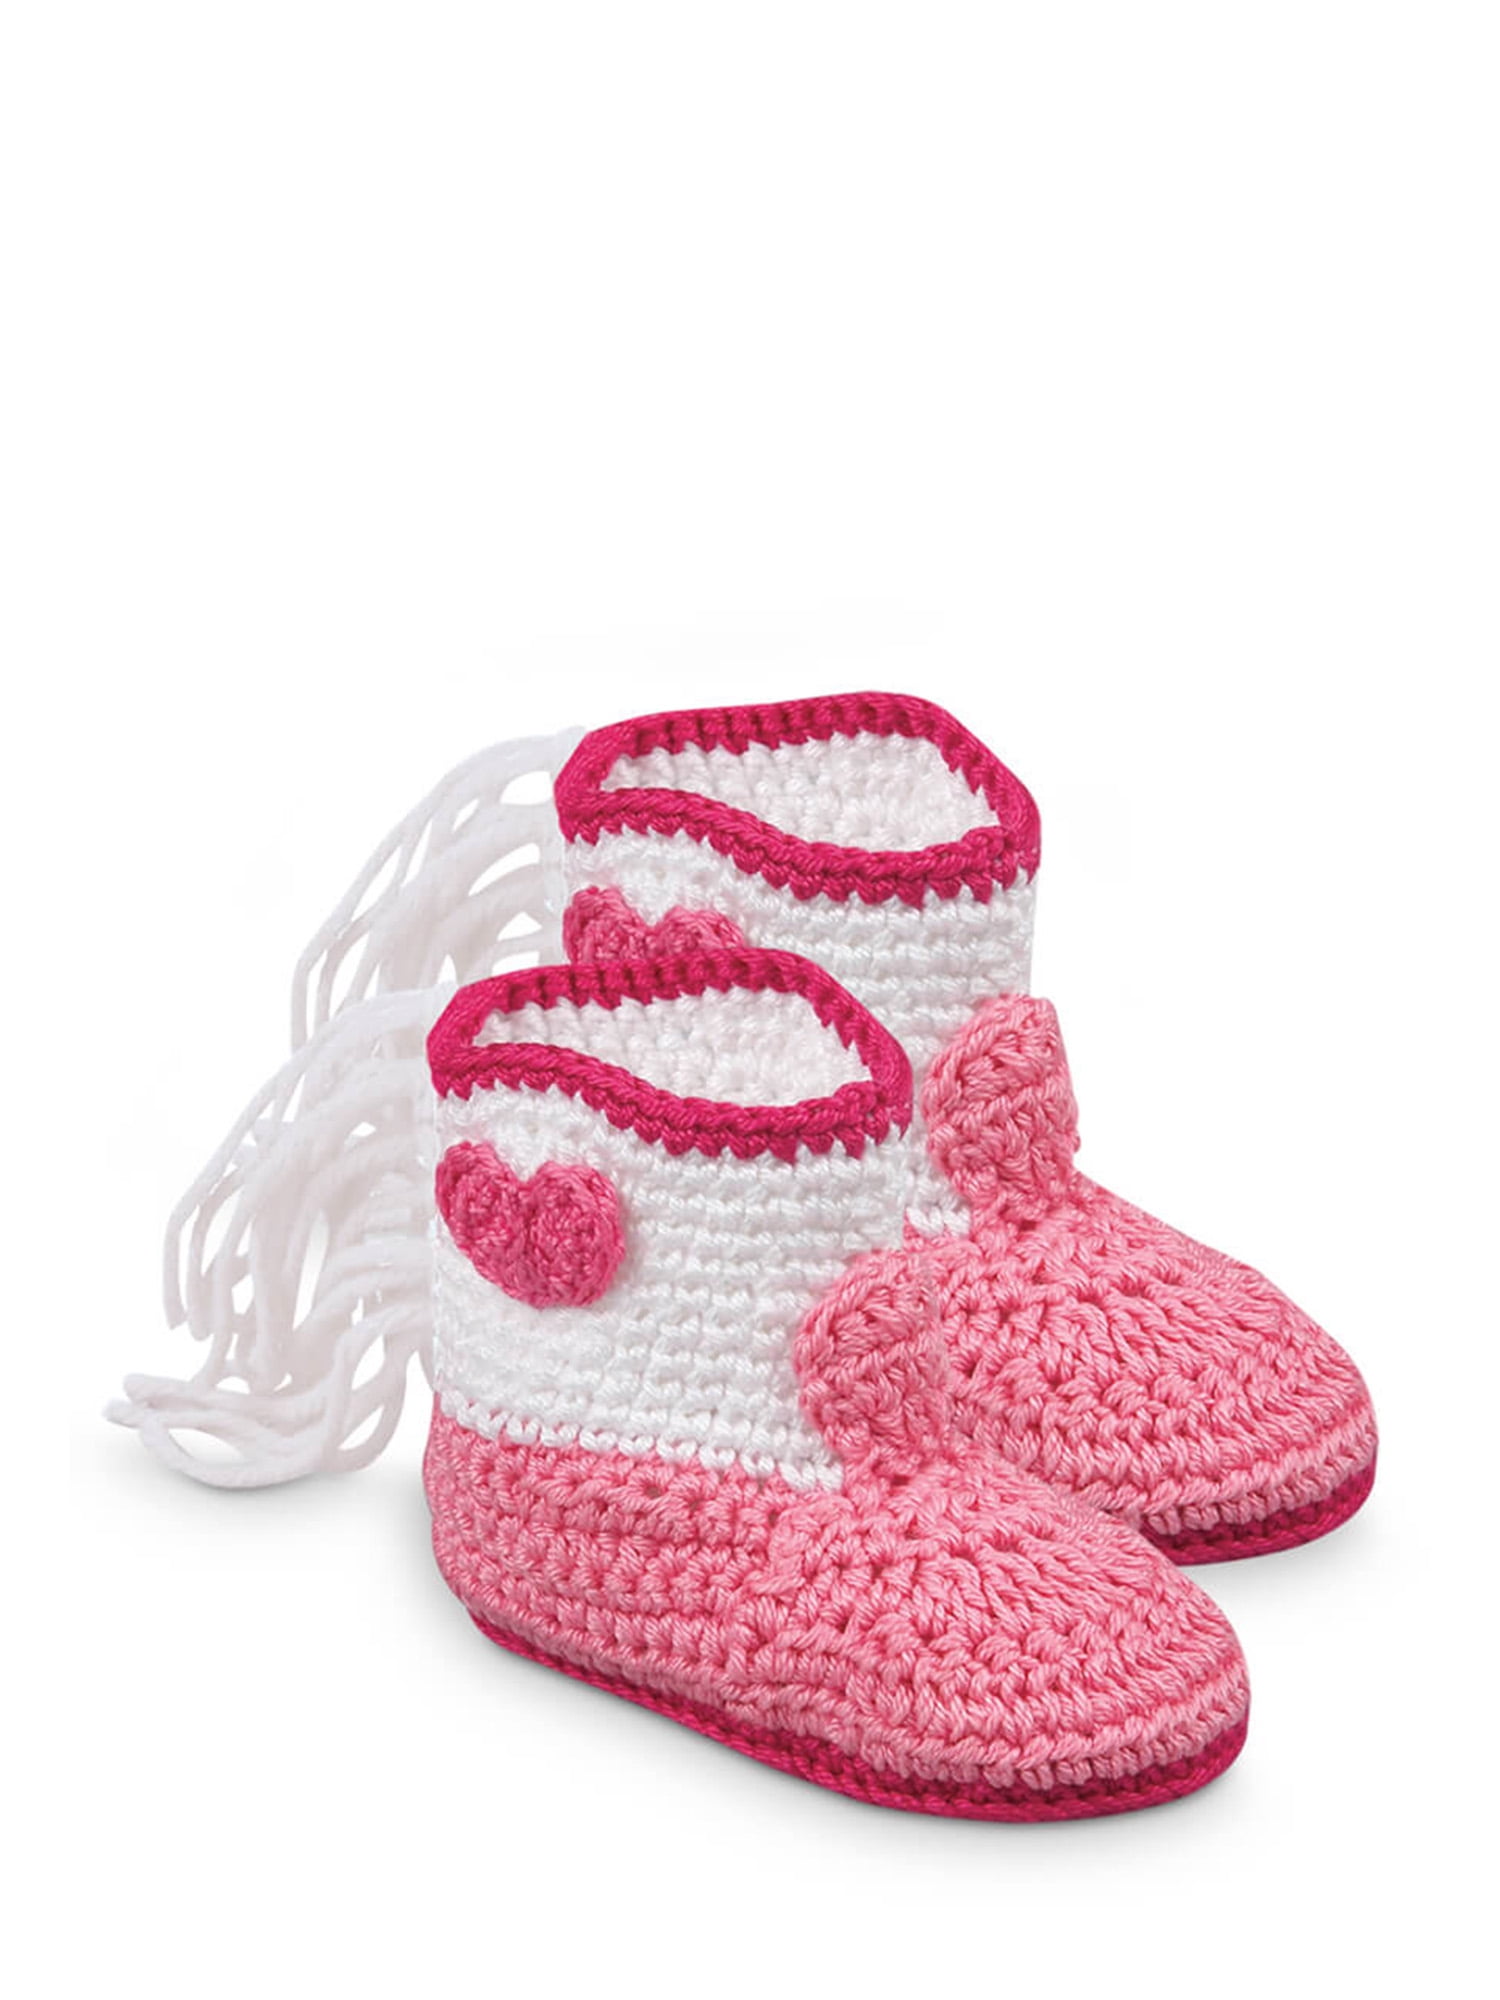 Baby Shoes Girl Crochet Knit Socks Crib Infant Aqua Shoe for Newborn to 6 Months 